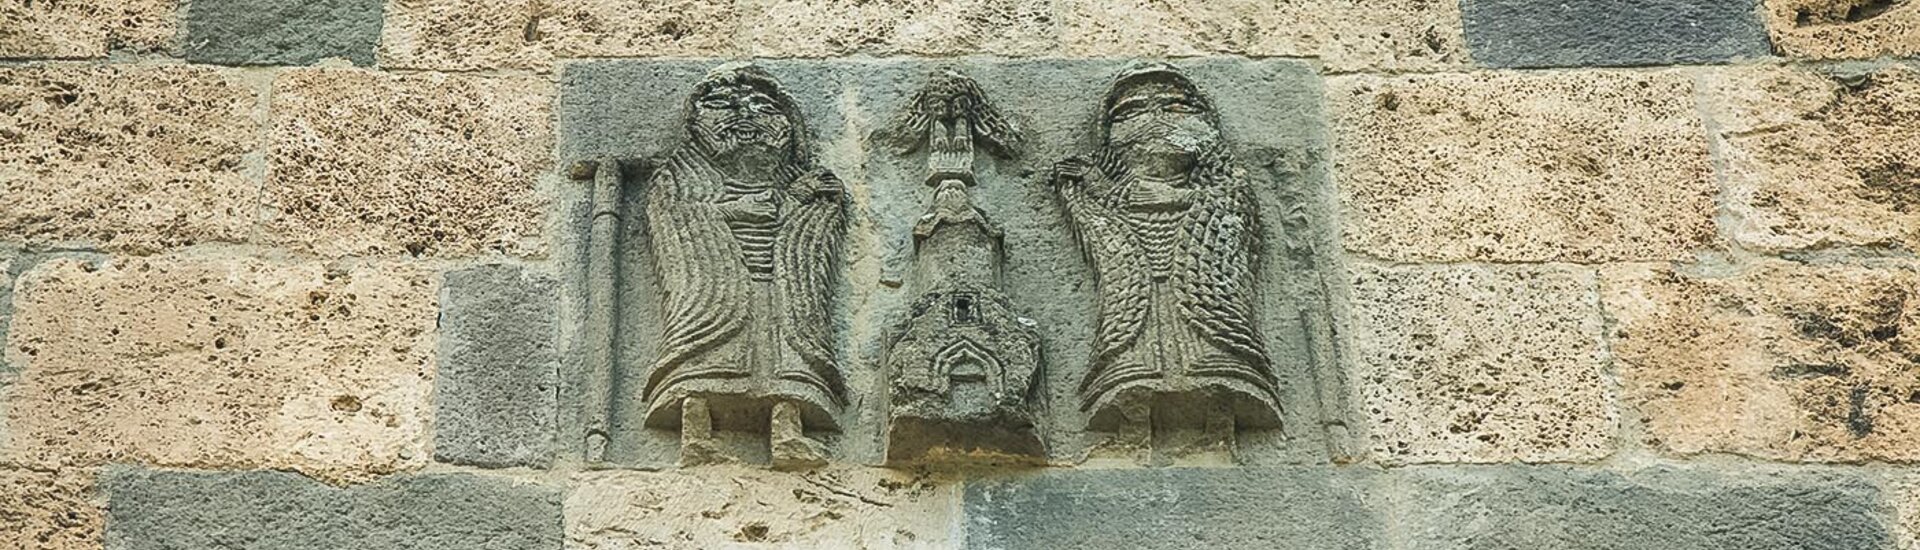 Fassade des Klosters Goschawank in Armenien